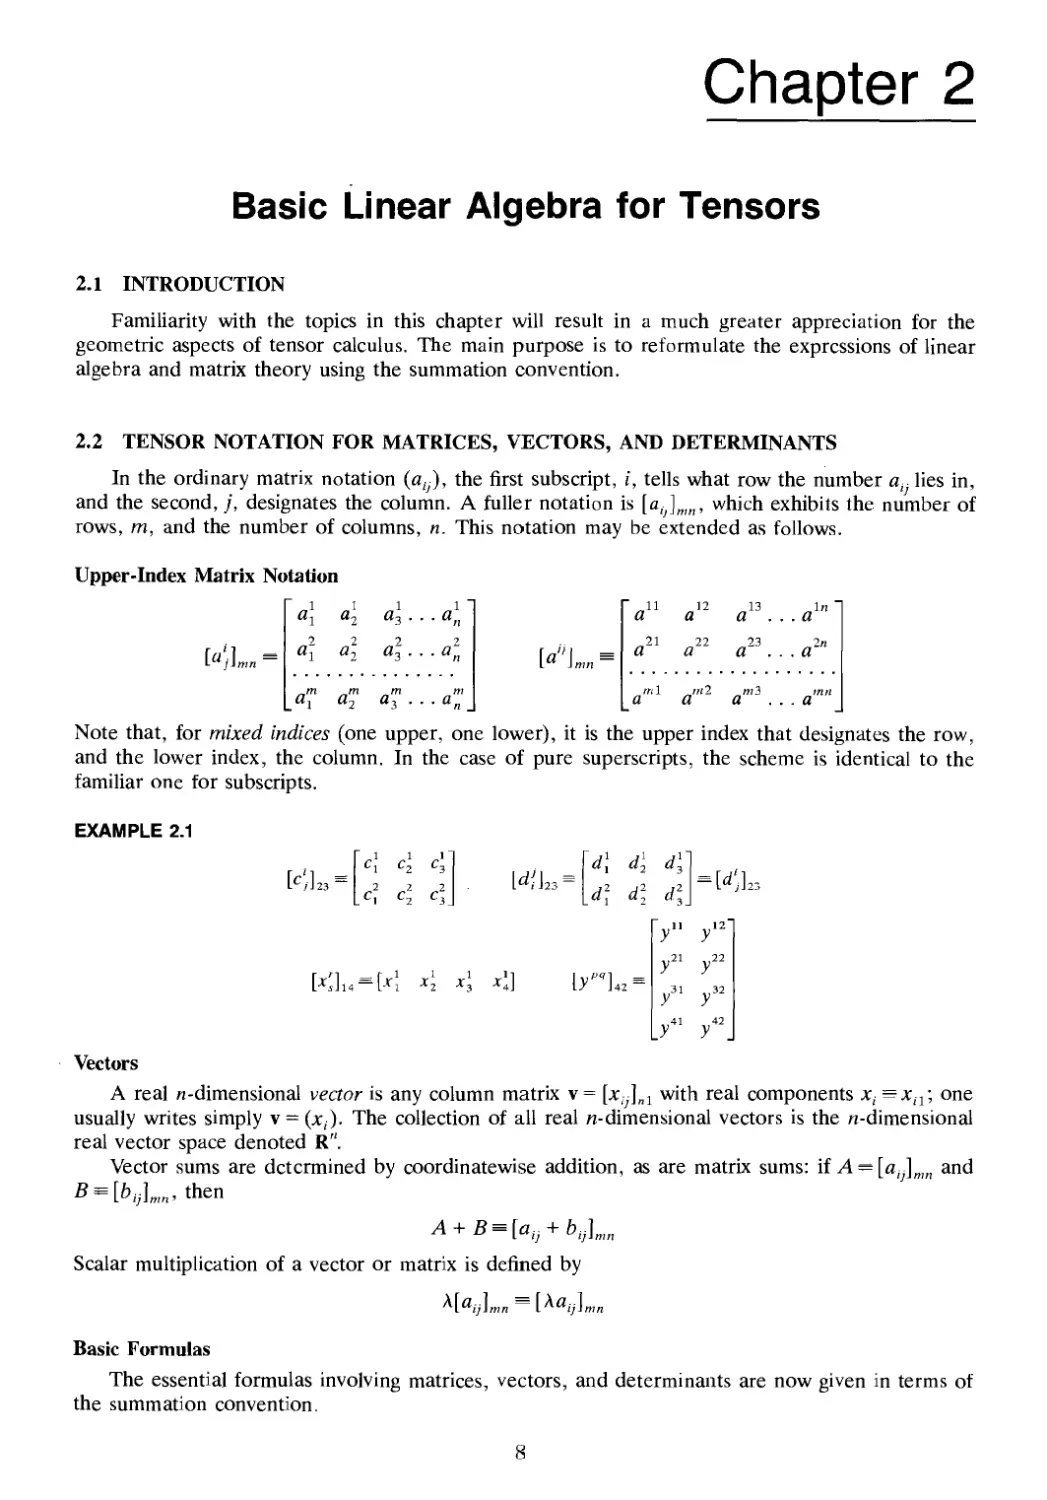 Chapter 2 BASIC LINEAR ALGEBRA FOR TENSORS
2.2 Tensor Notation for Matrices, Vectors, and Determinants